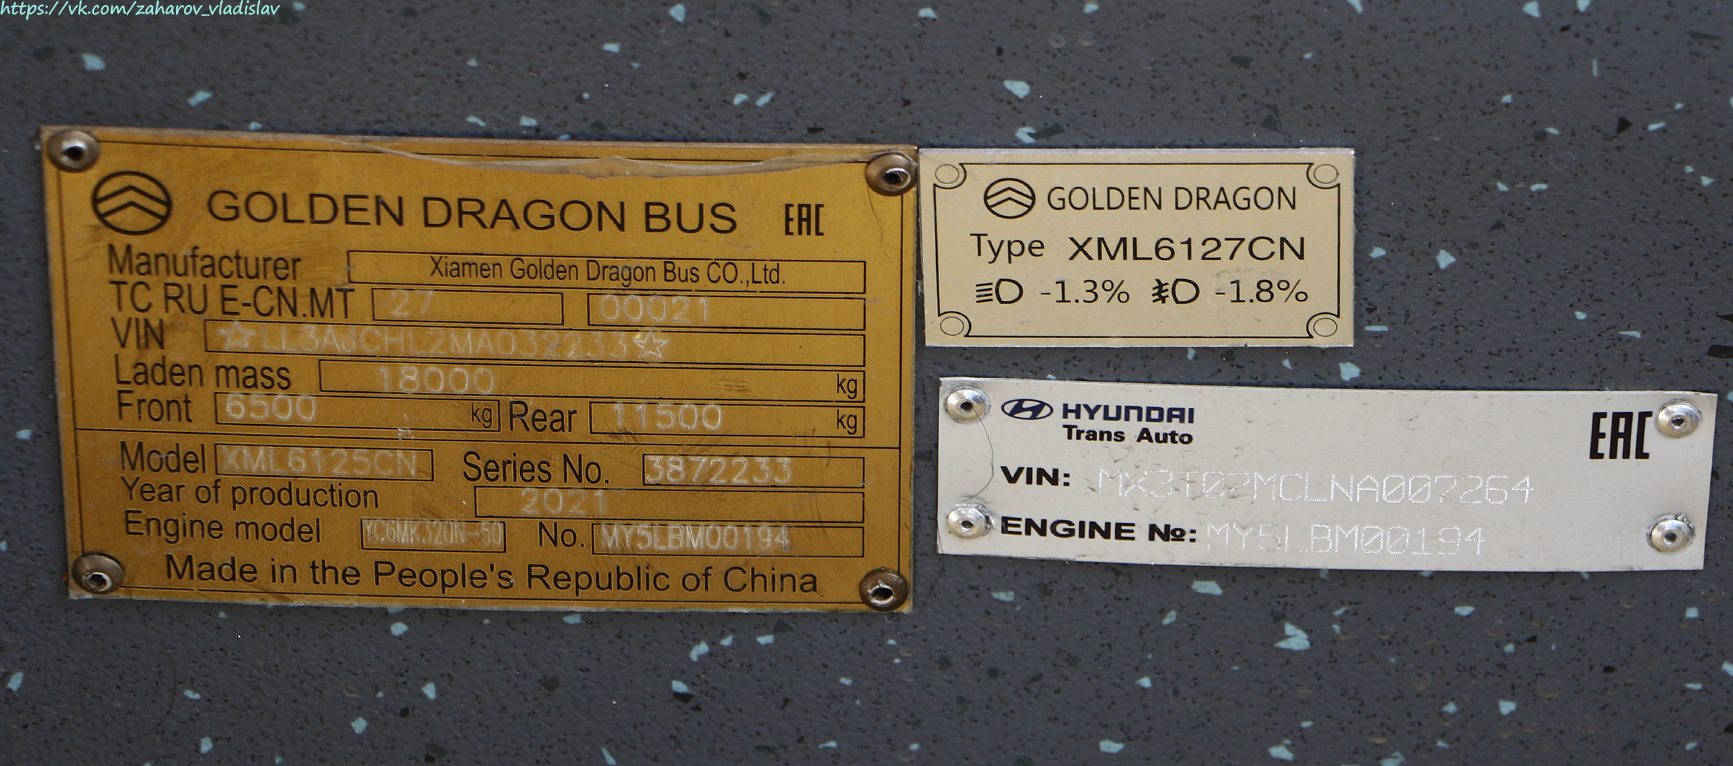 Ałmaty, Golden Dragon XML6125CN (Hyundai Trans Auto) Nr 3703